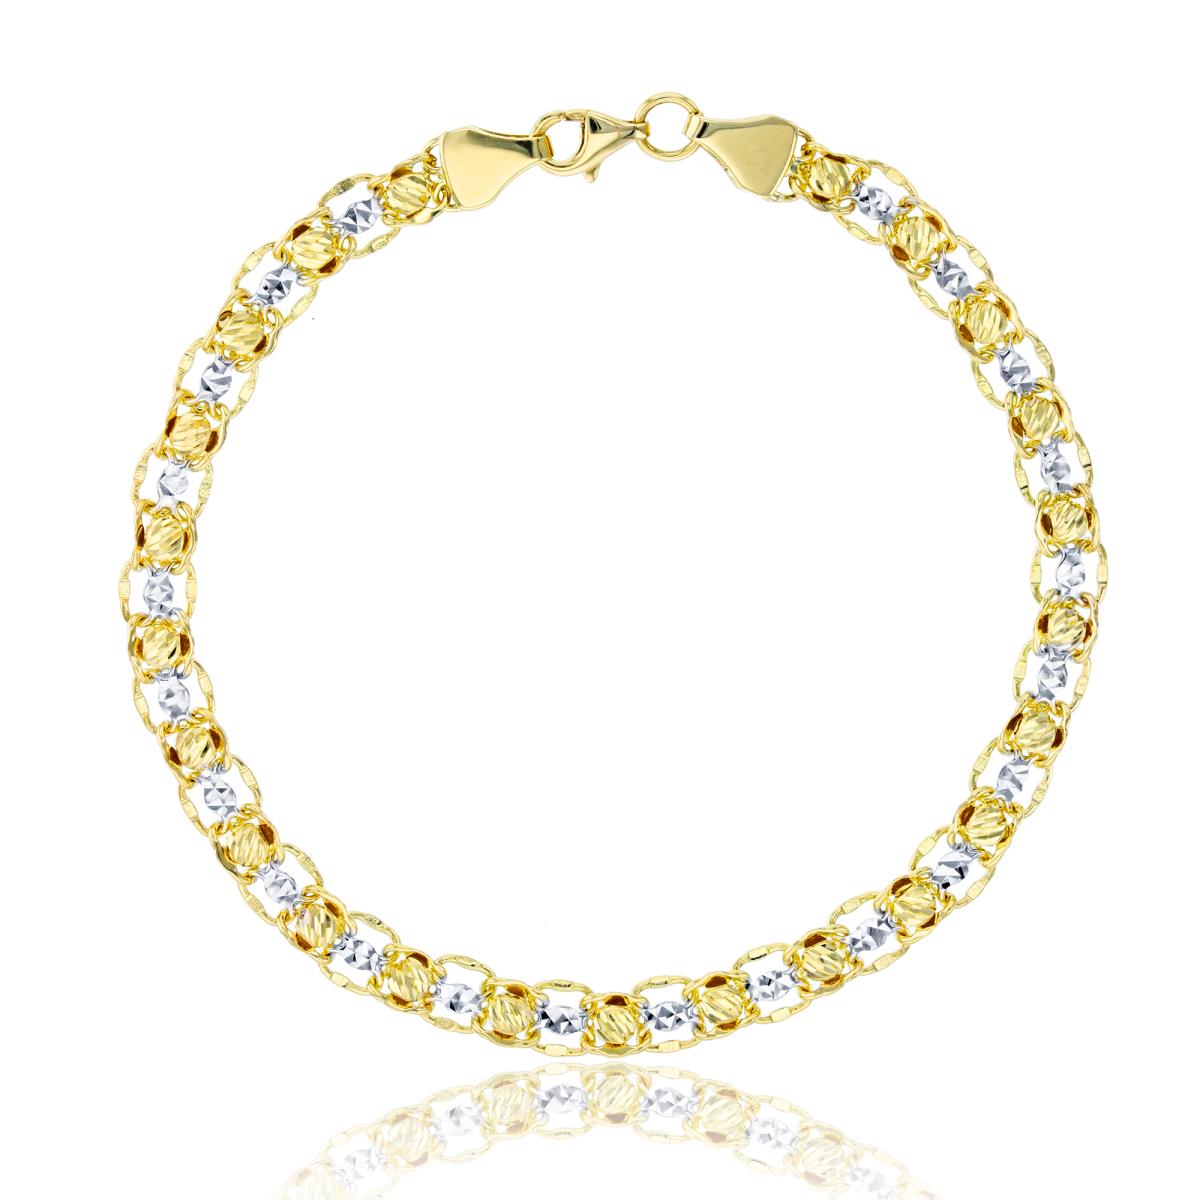 10K Two-Tone Gold Diamond Cut Beads Linked Bracelet